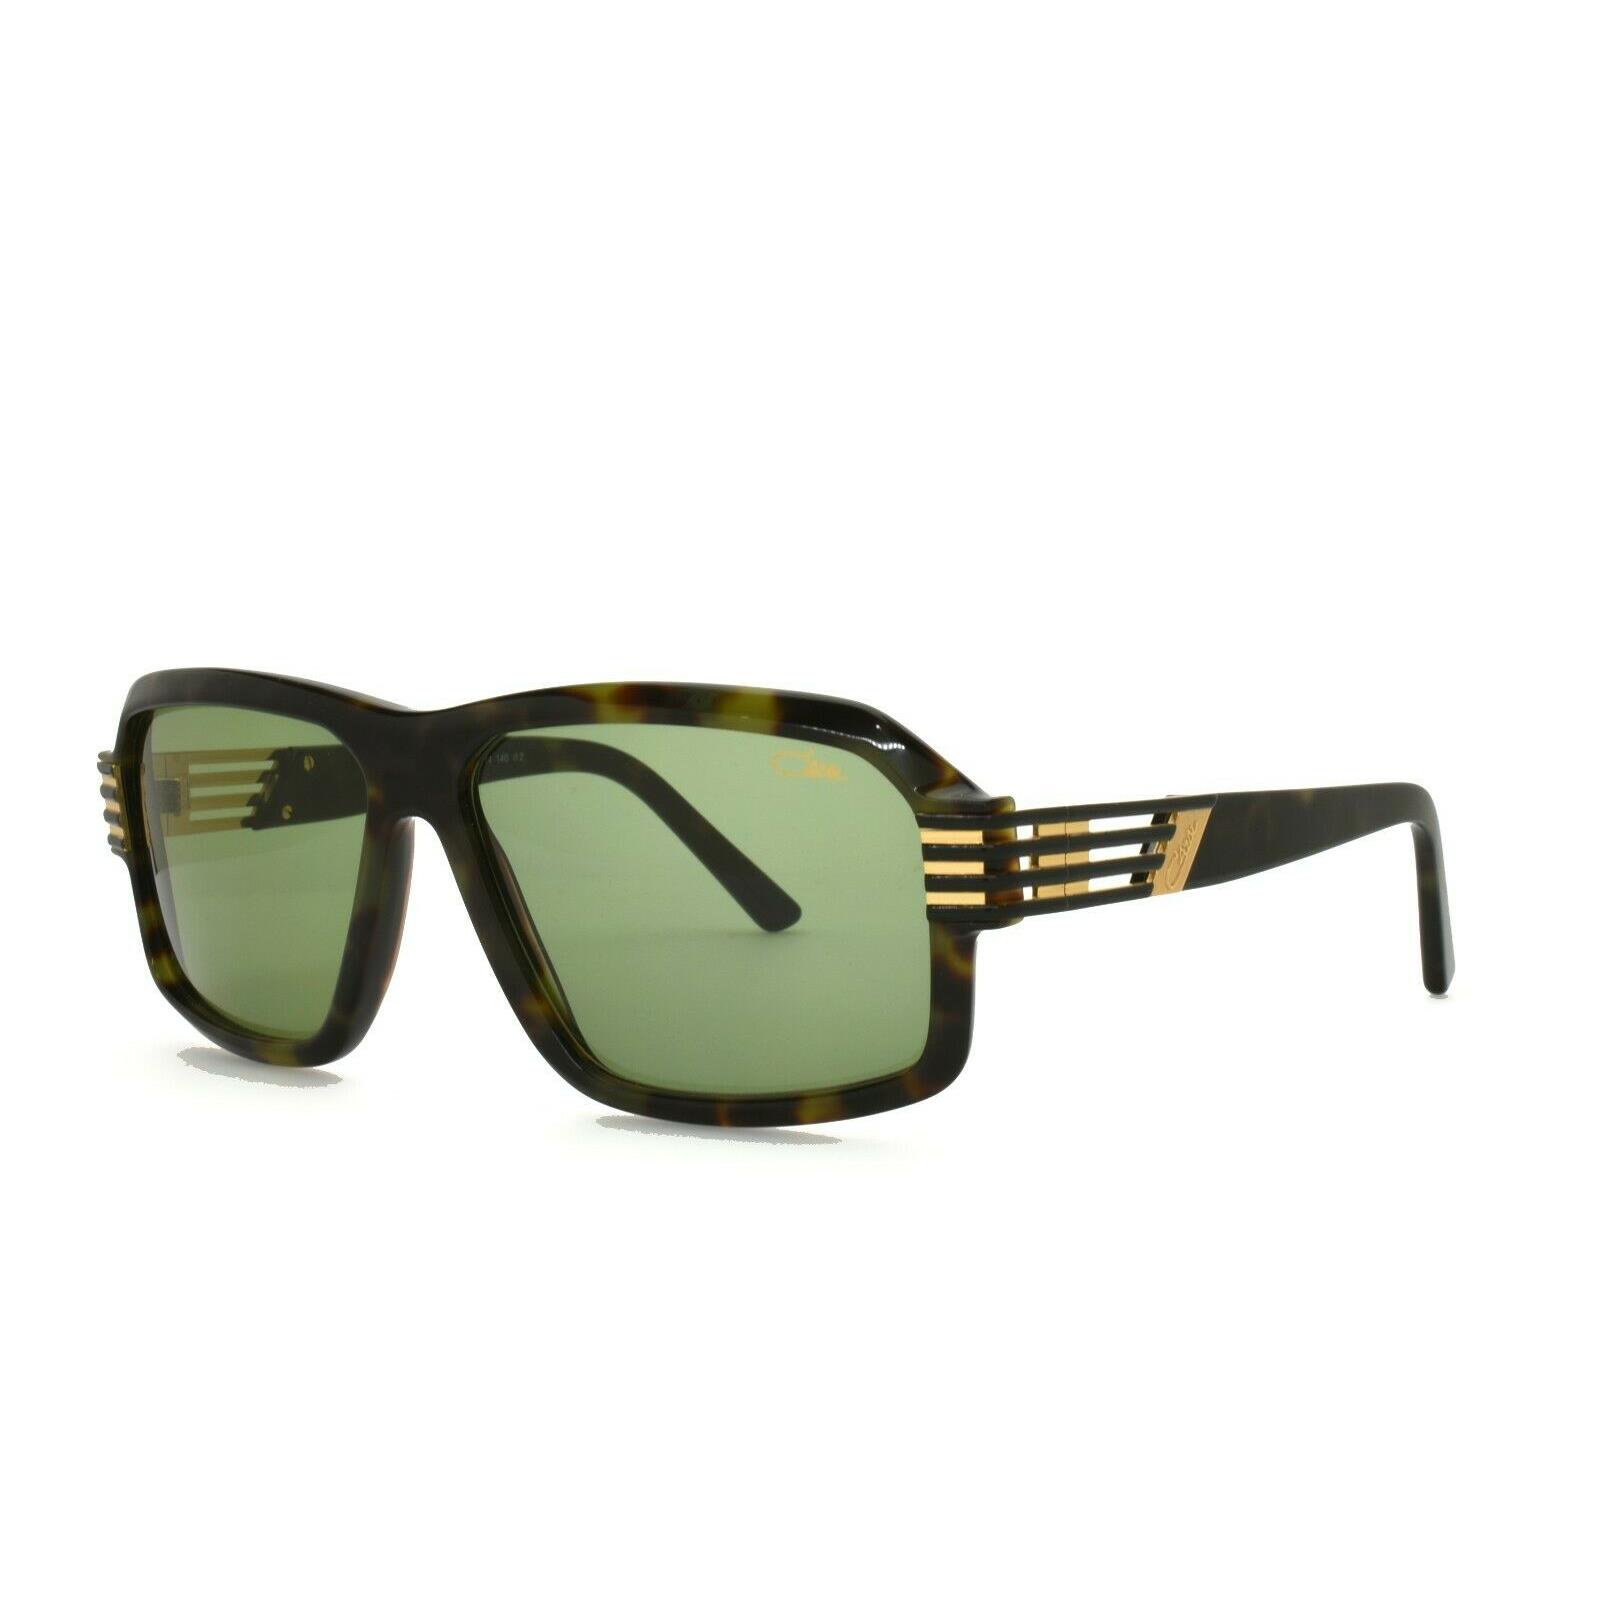 Cazal Sunglasses Tortoise 8023 003 61-14-140 by Germany